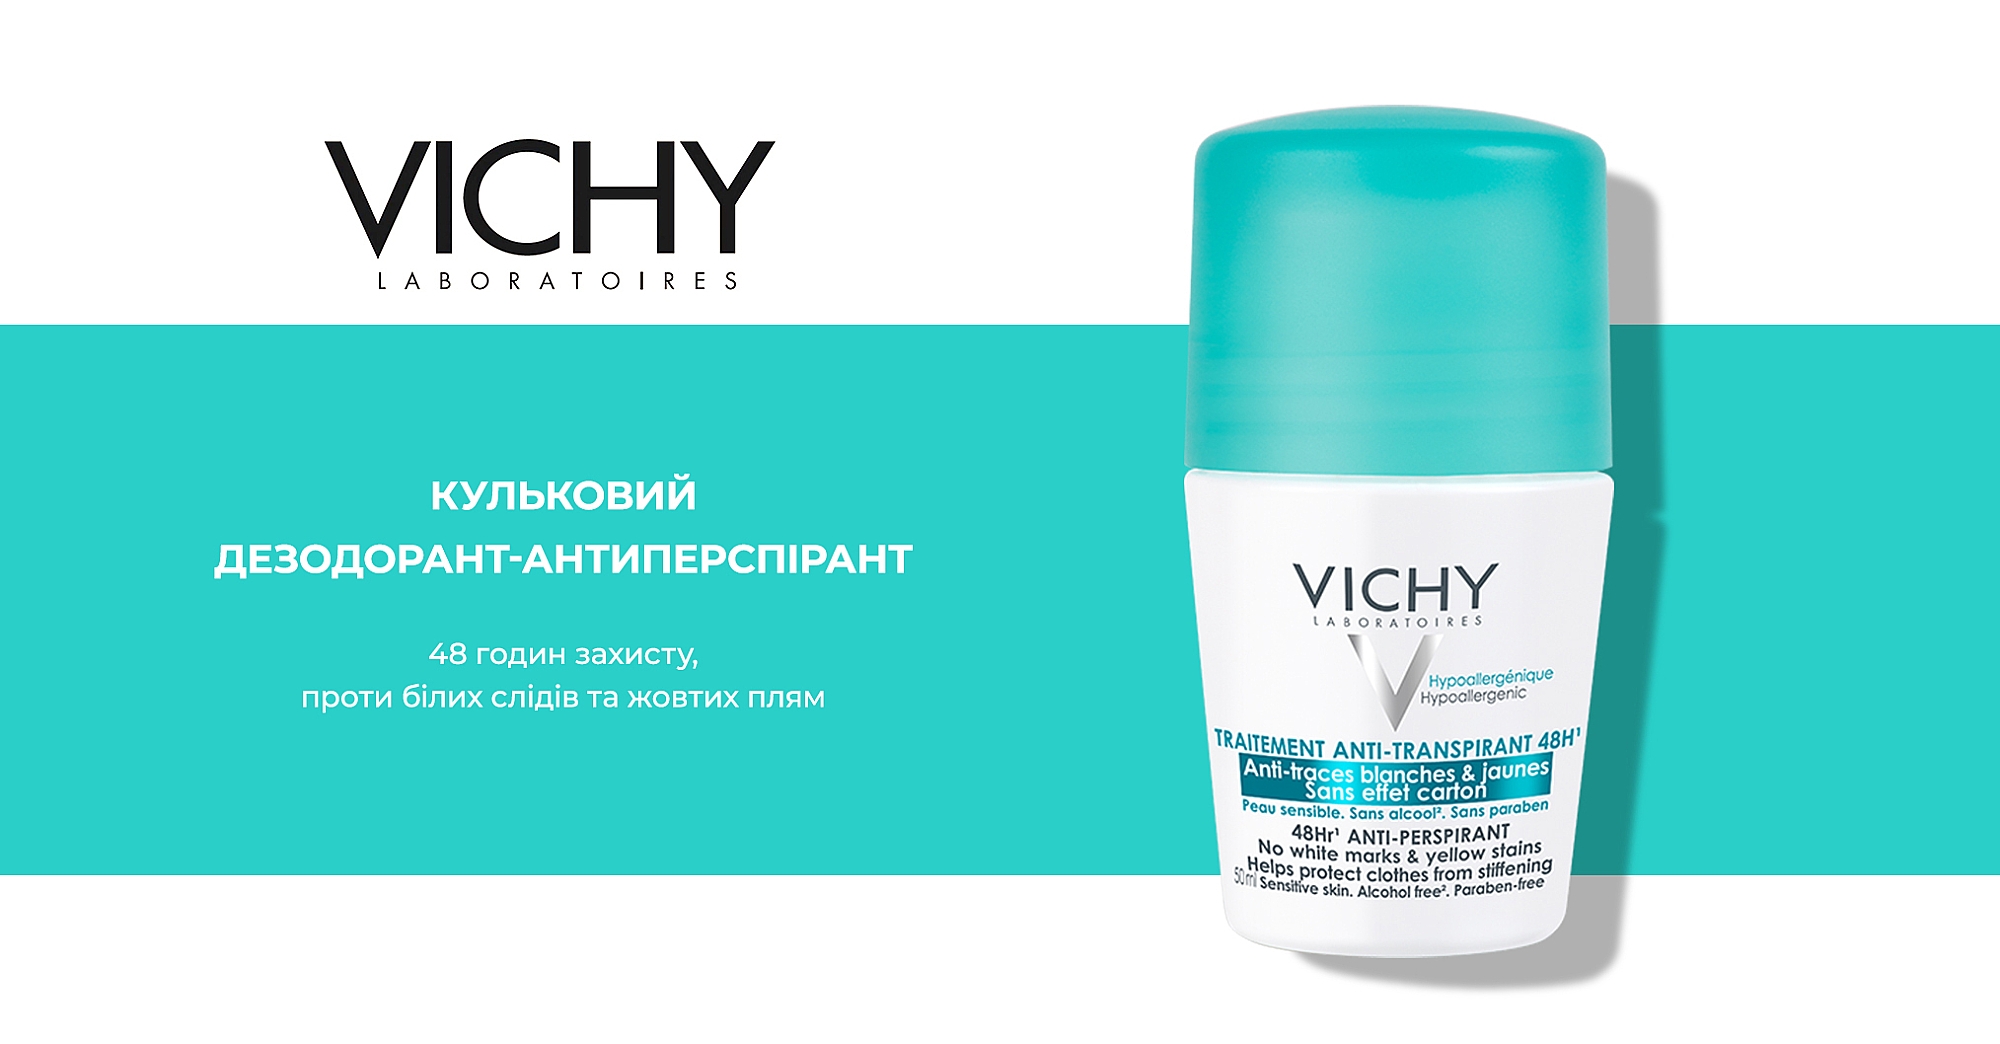 Vichy Anti-Transpirant 48H2